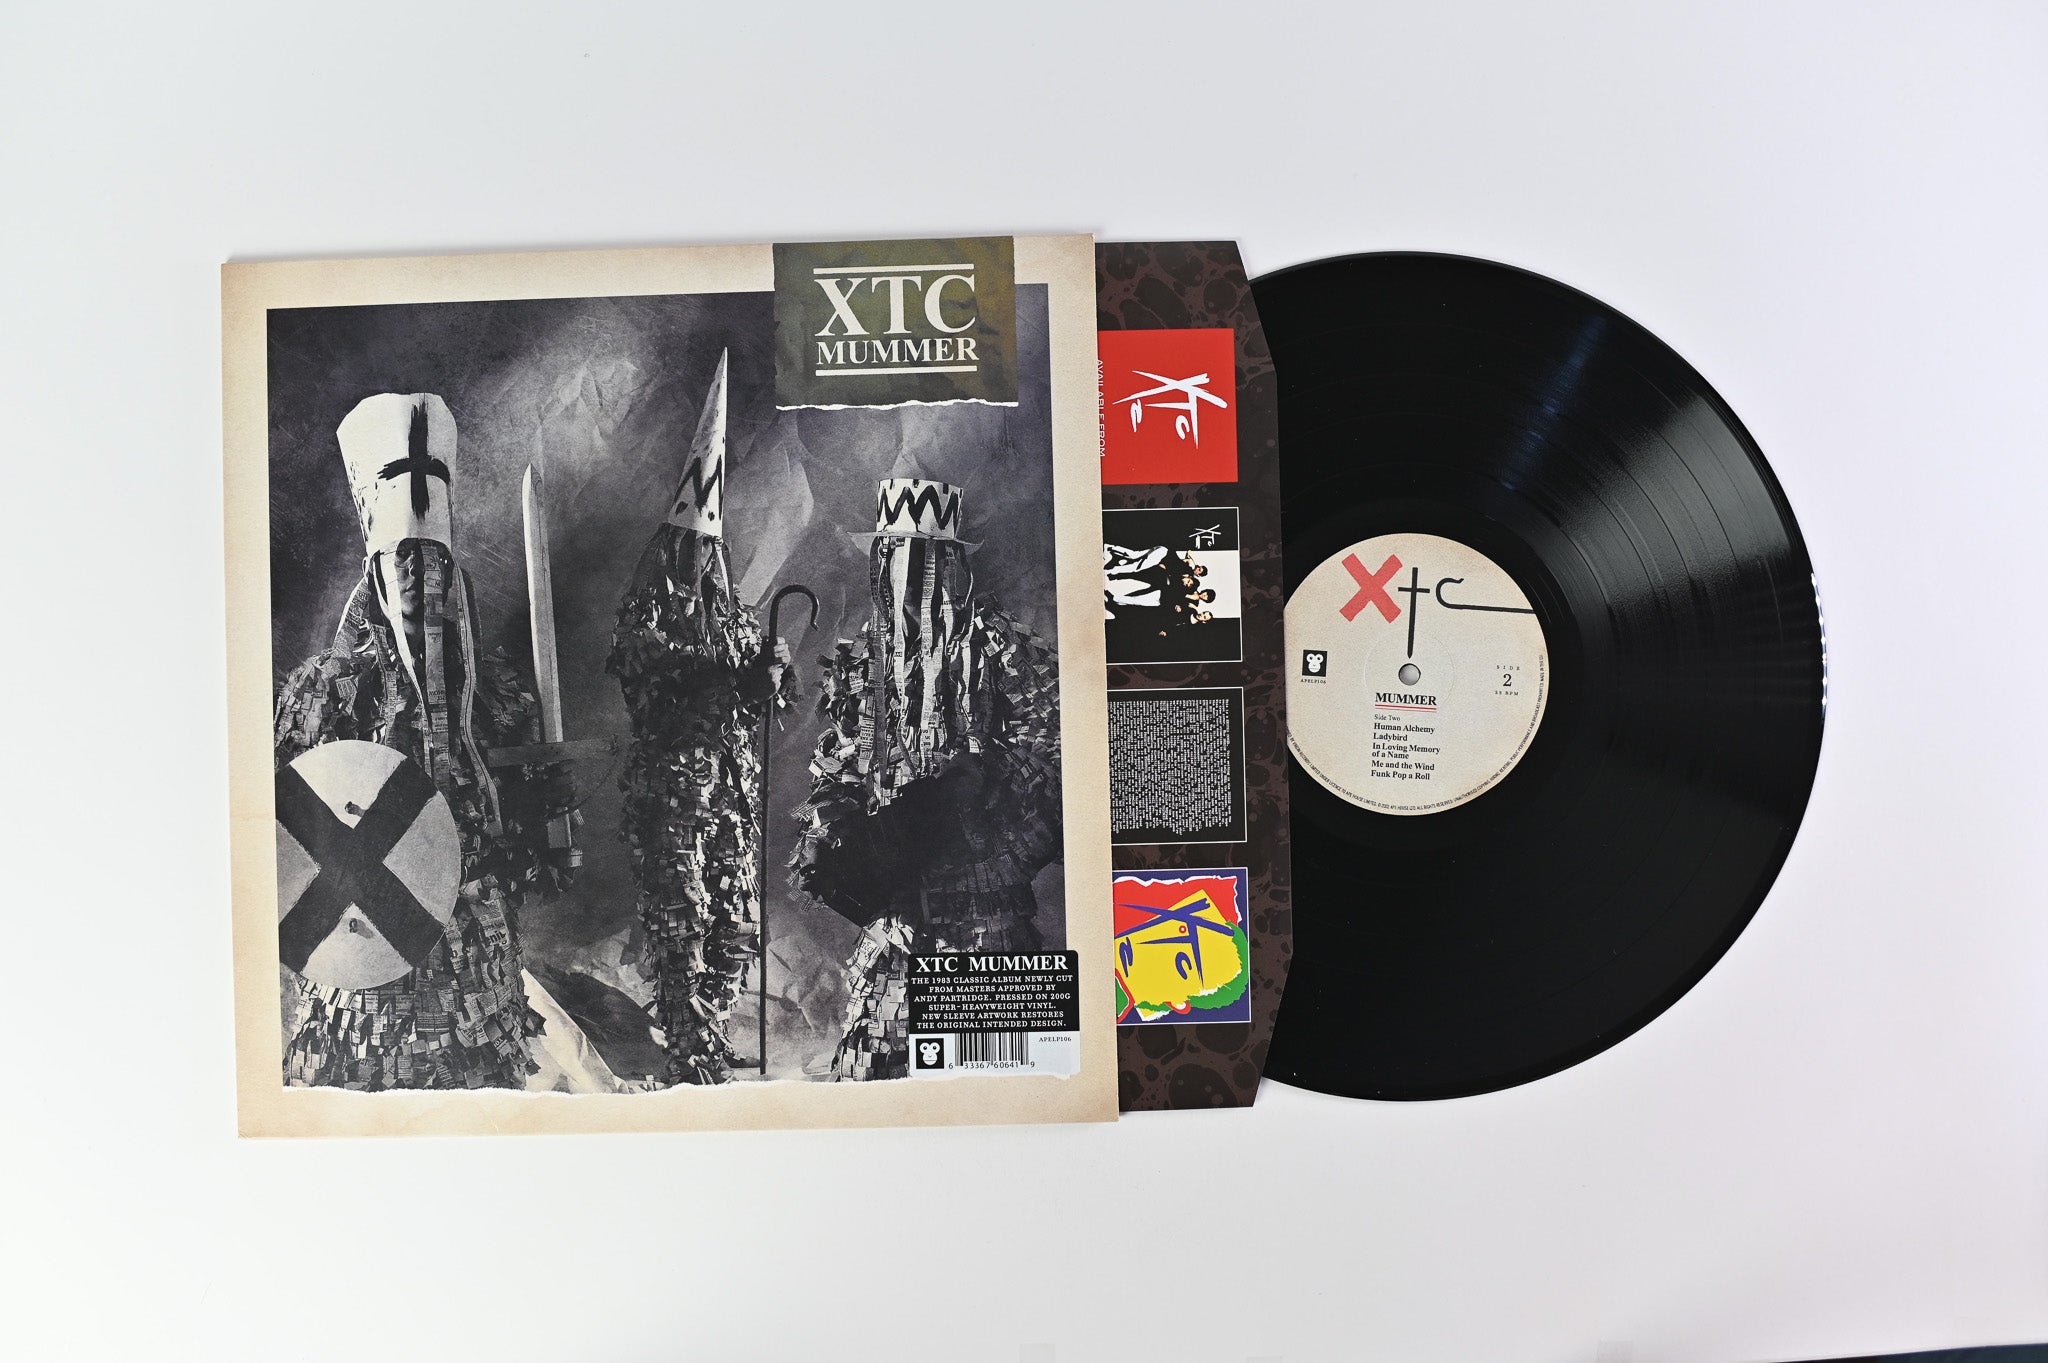 XTC - Mummer on Ape House 200g Reissue